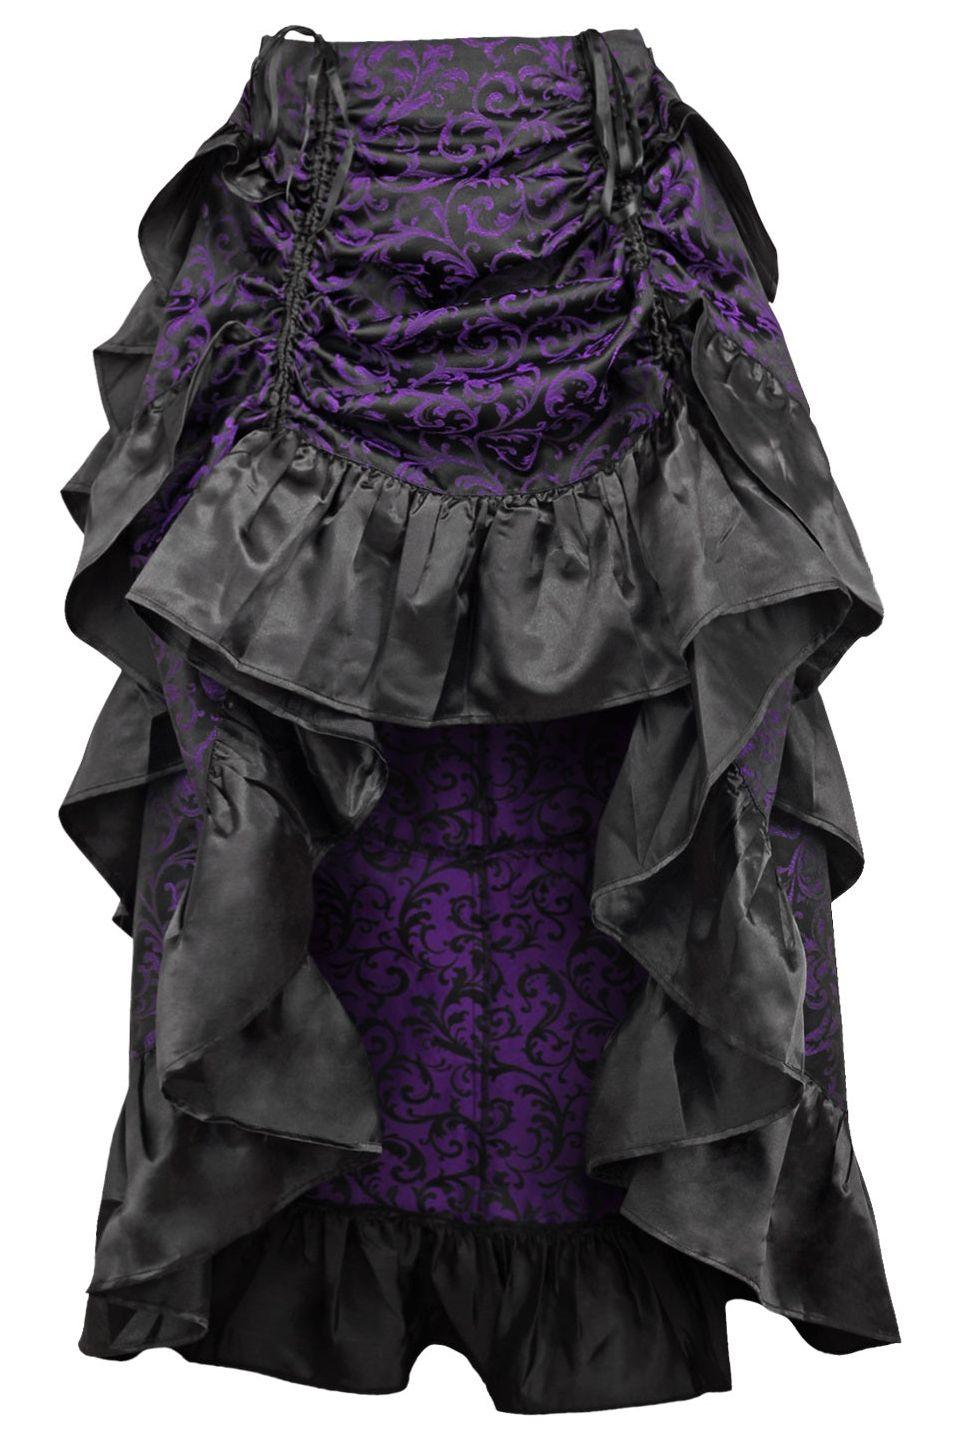 Purple/Black Brocade Adjustable High Low Bustle Skirt - AMIClubwear